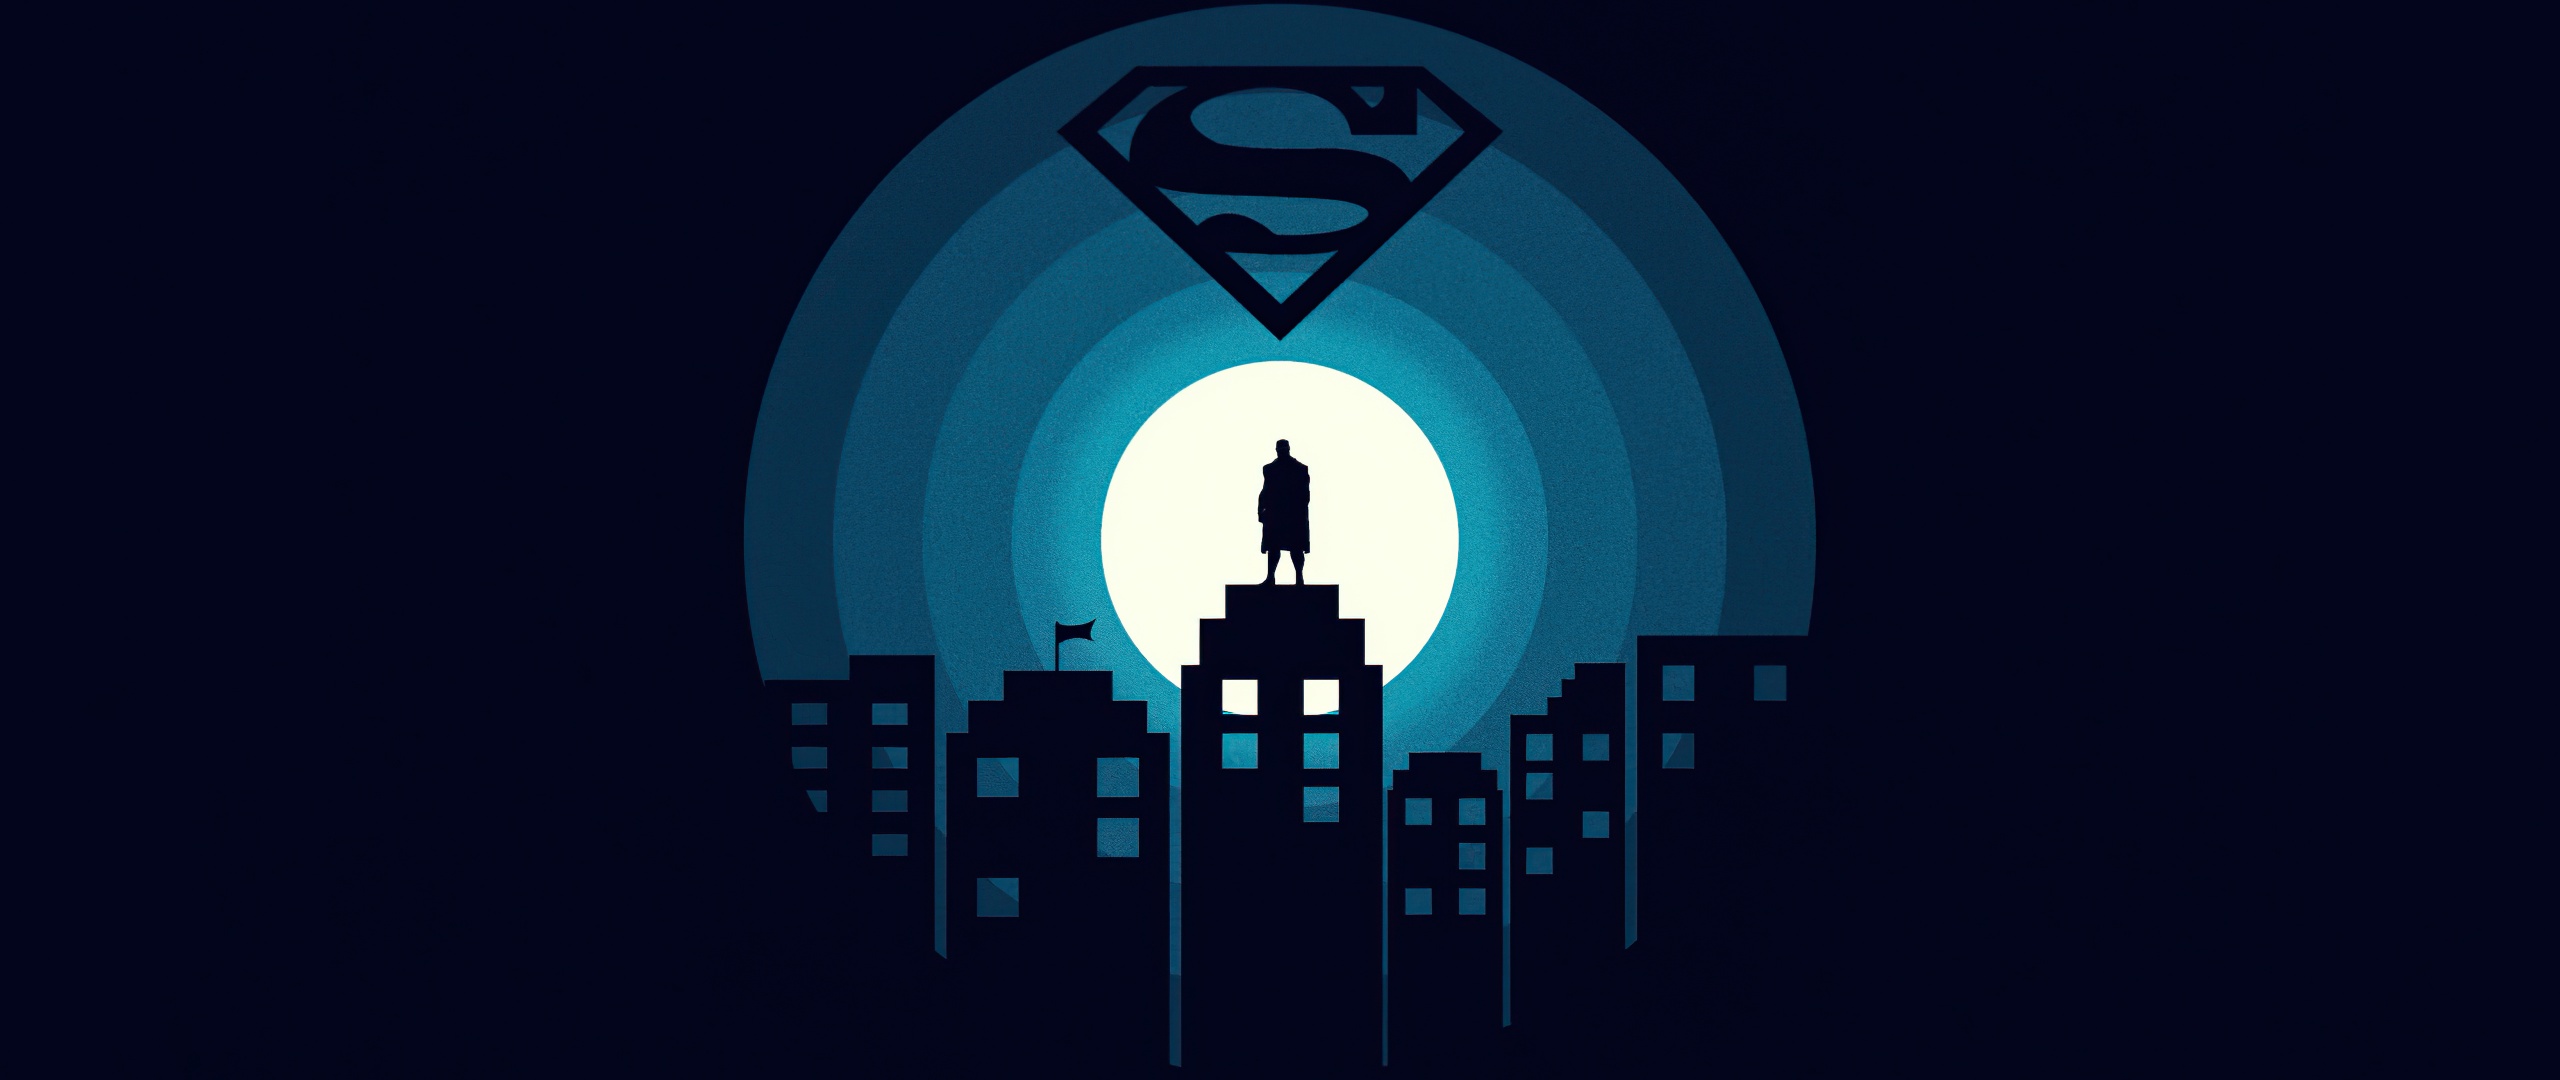 Superman Wallpaper 4K, DC Superheroes, Black/Dark, #5223